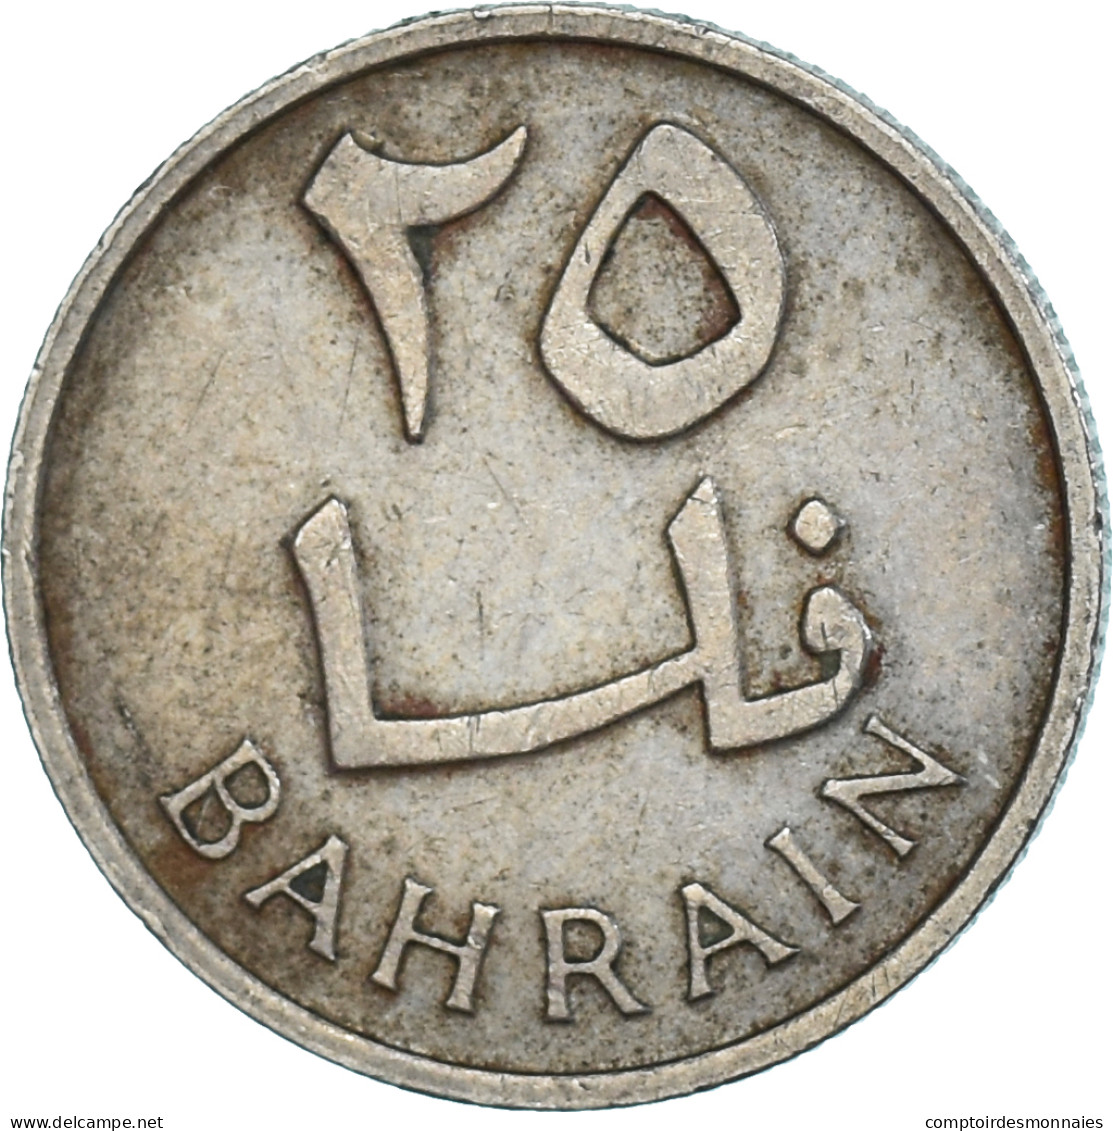 Monnaie, Bahrain, 25 Fils, 1965 - Bahrain